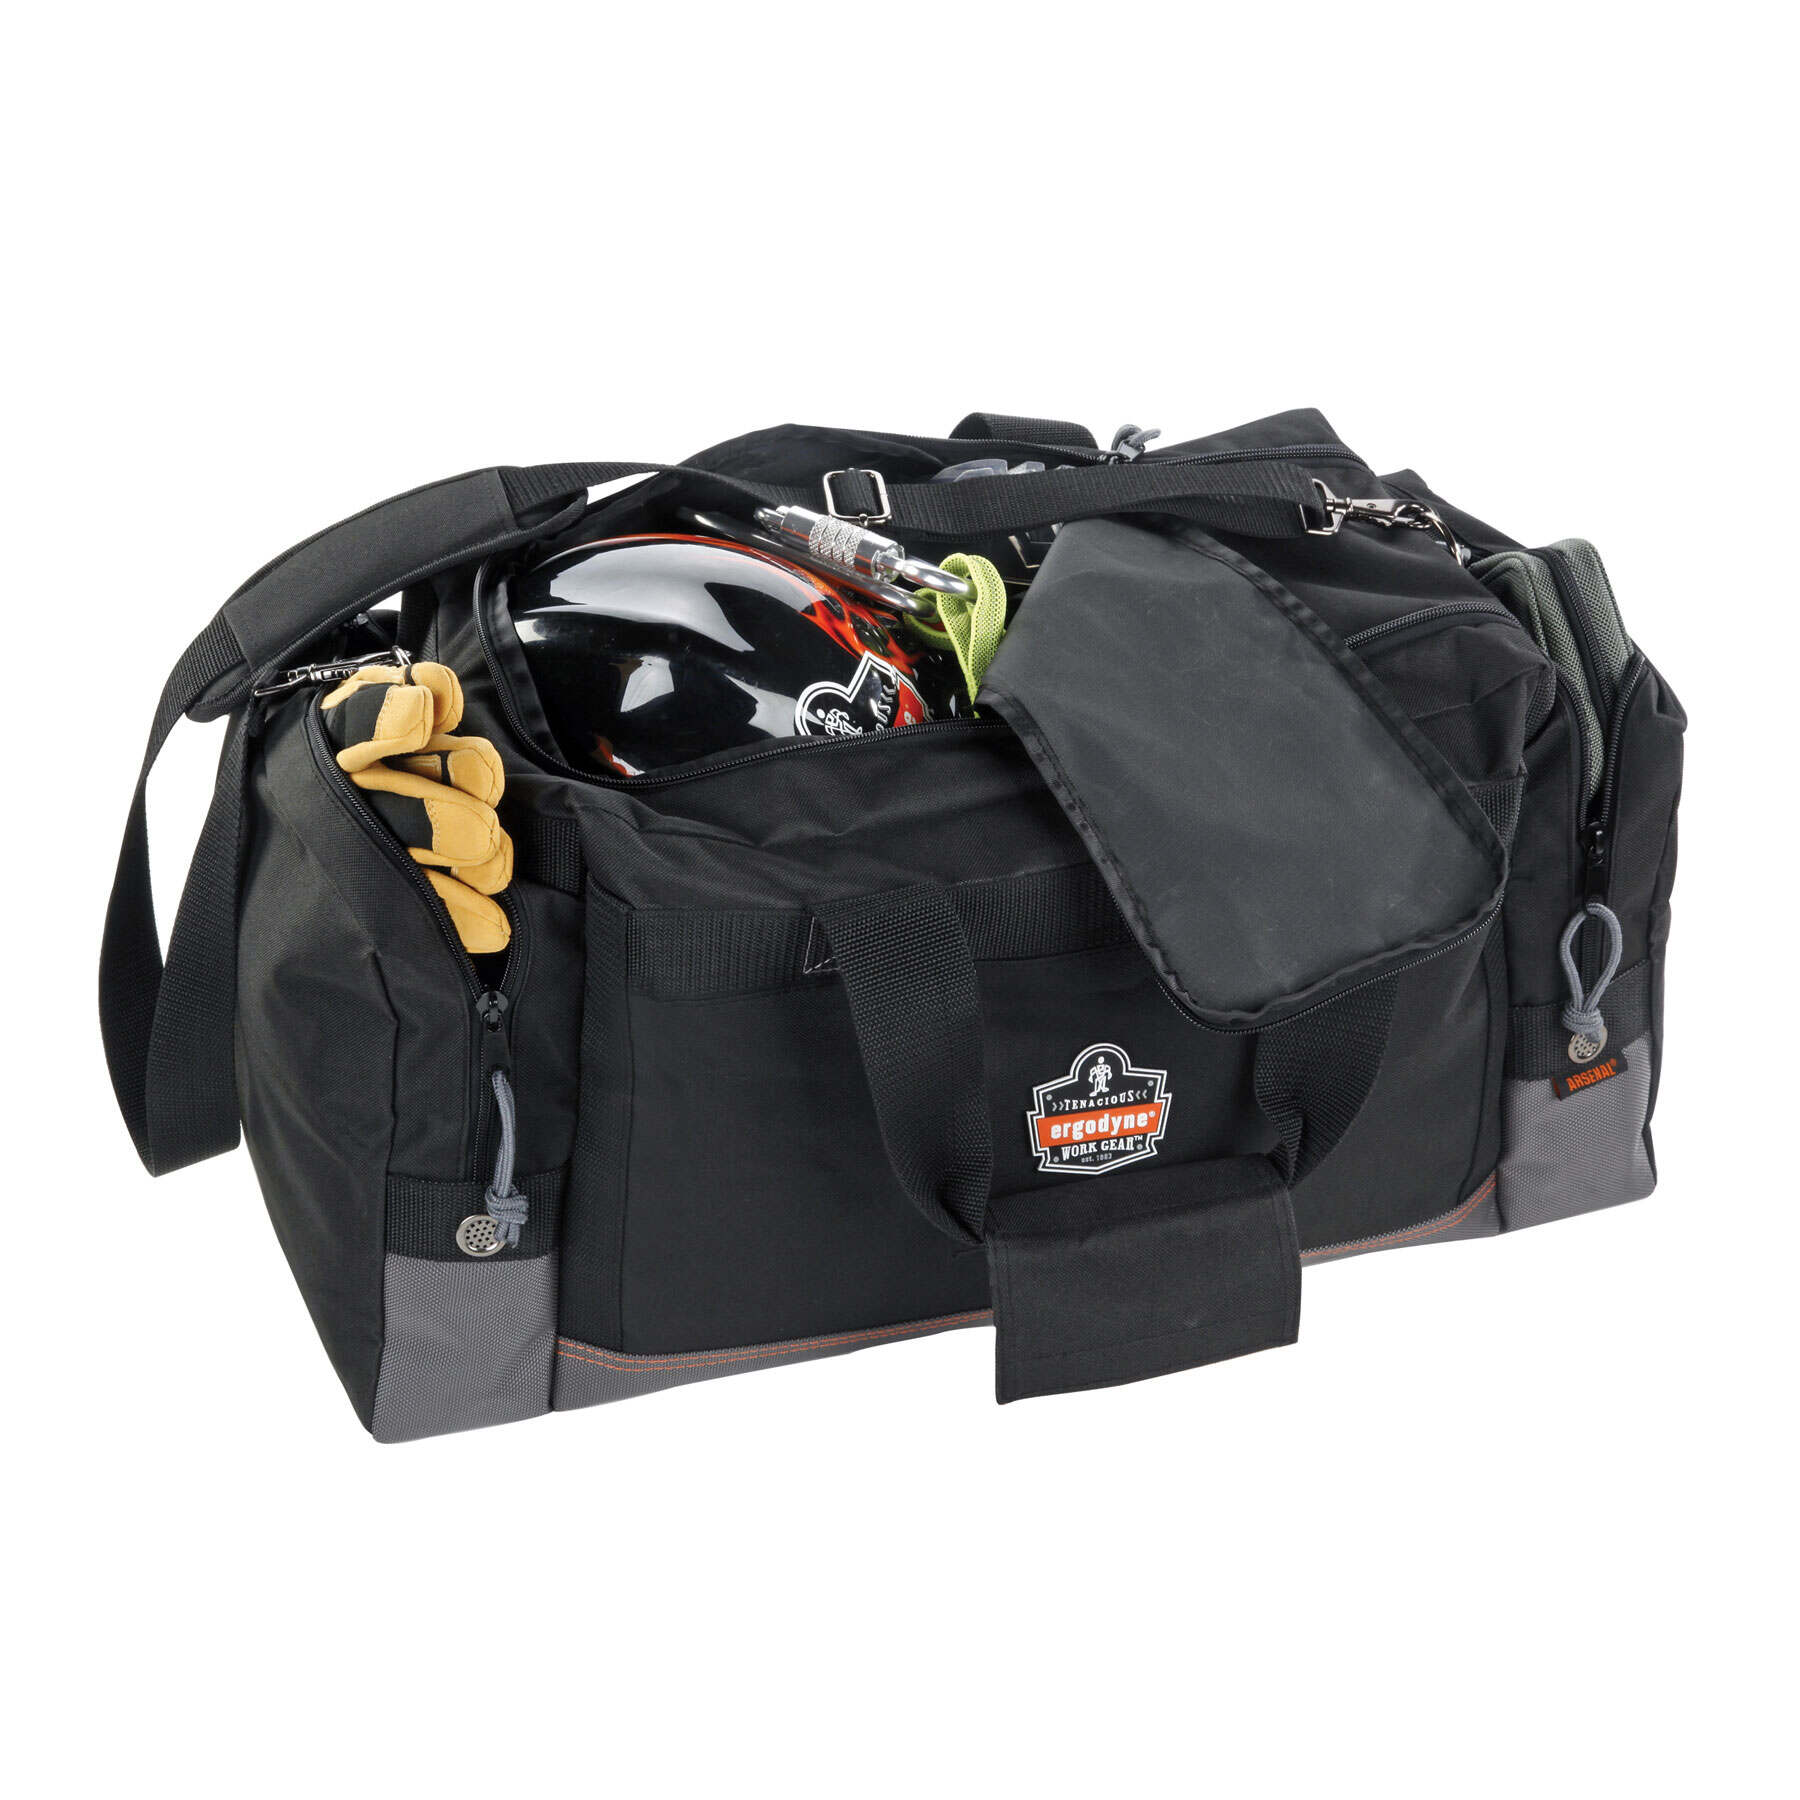 Ergodyne Arsenal General Duty Gear Bag from Columbia Safety